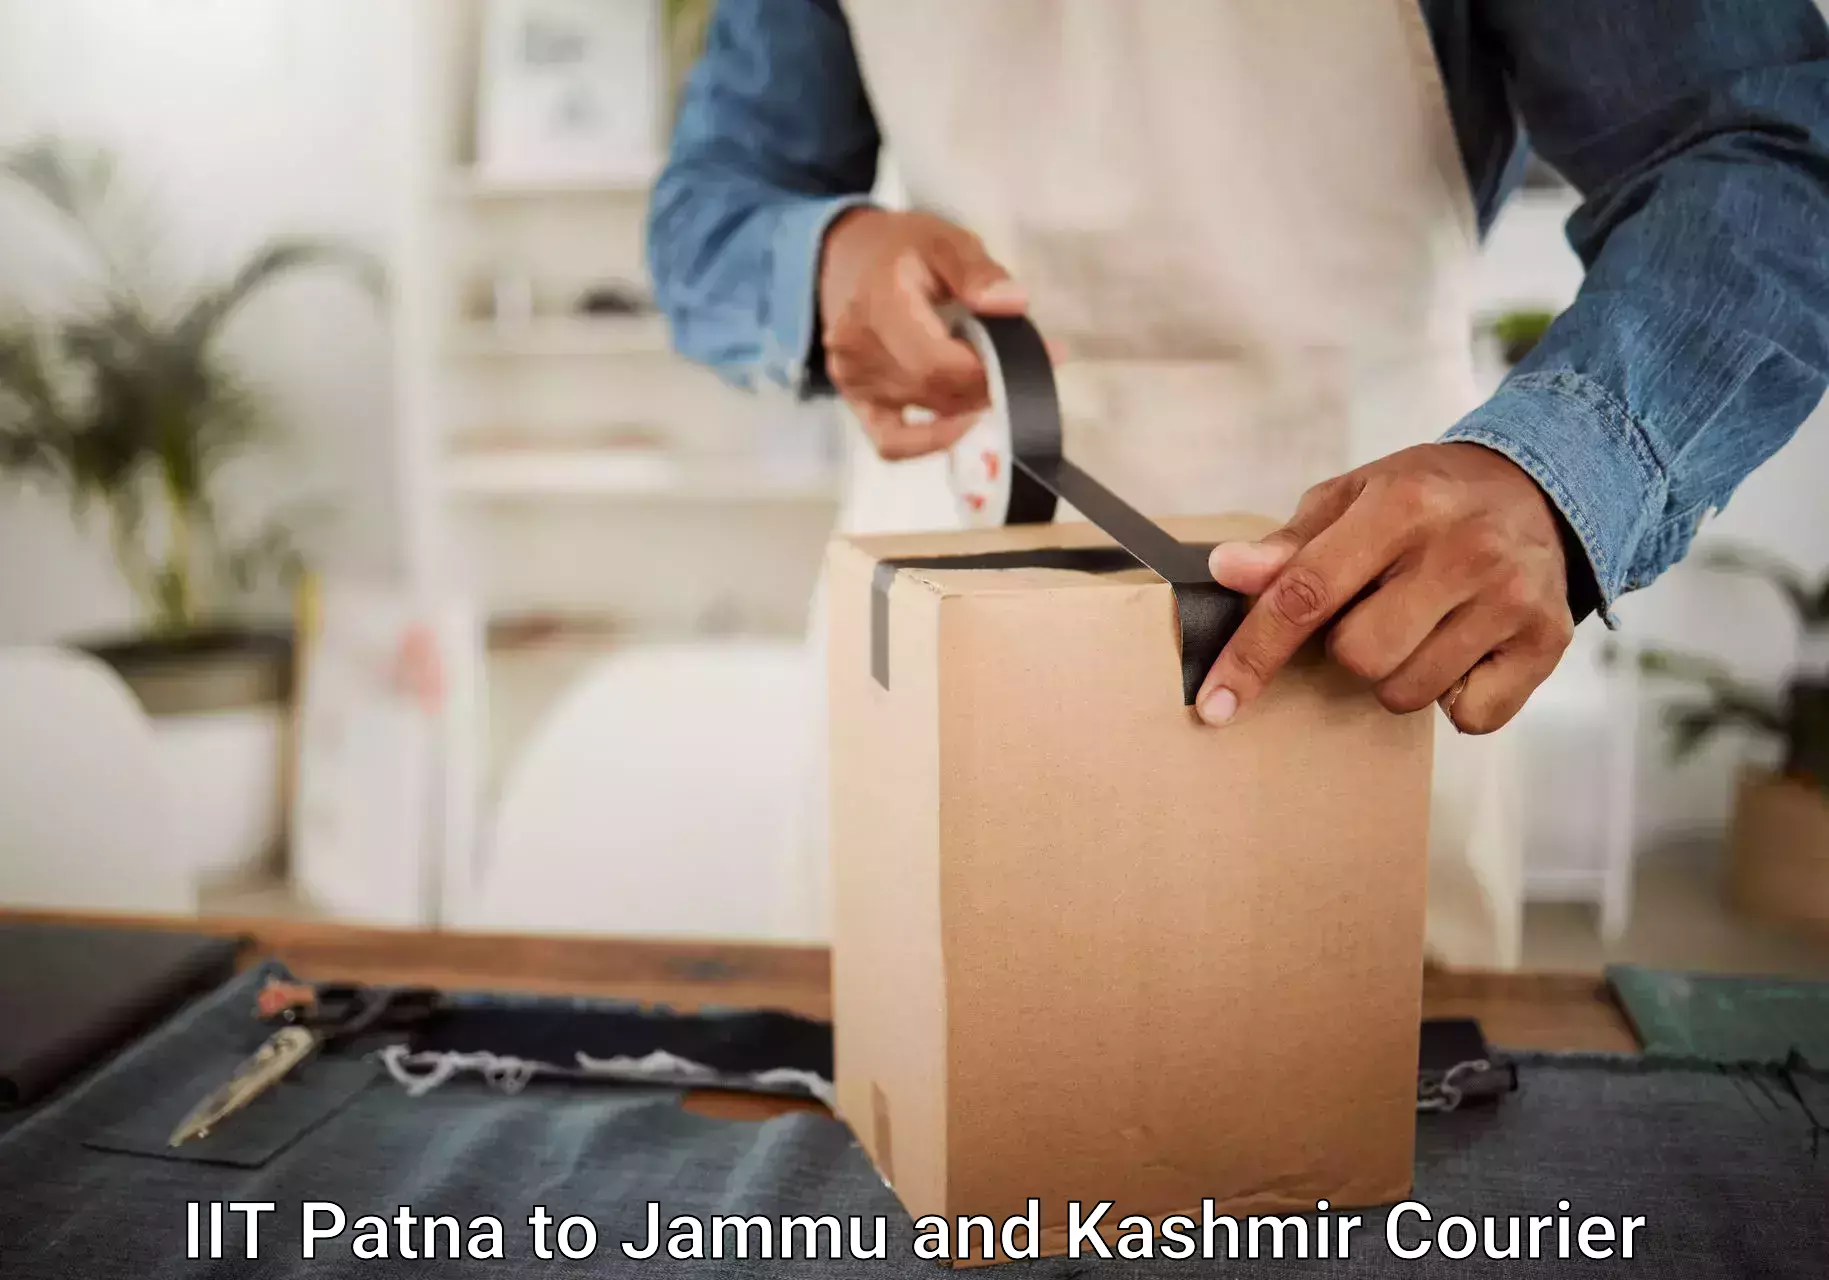 Luggage transport company IIT Patna to Jammu